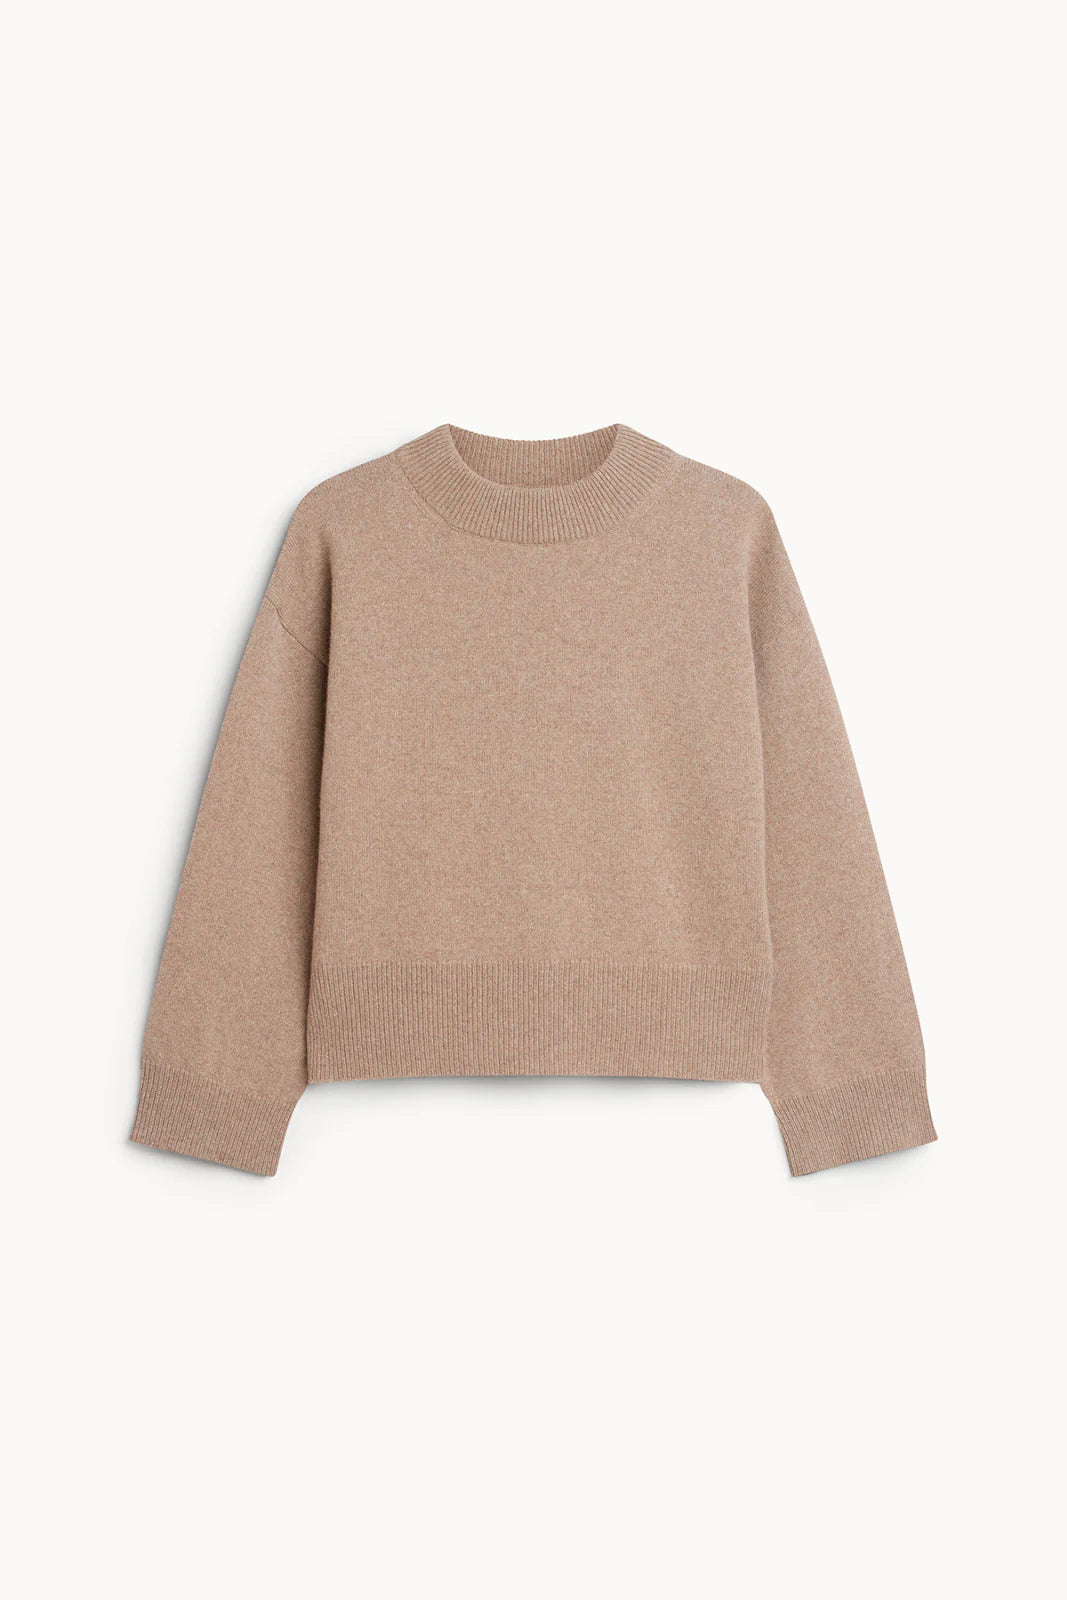 Les Goodies - Elementy Wear Napa Merino Sweater